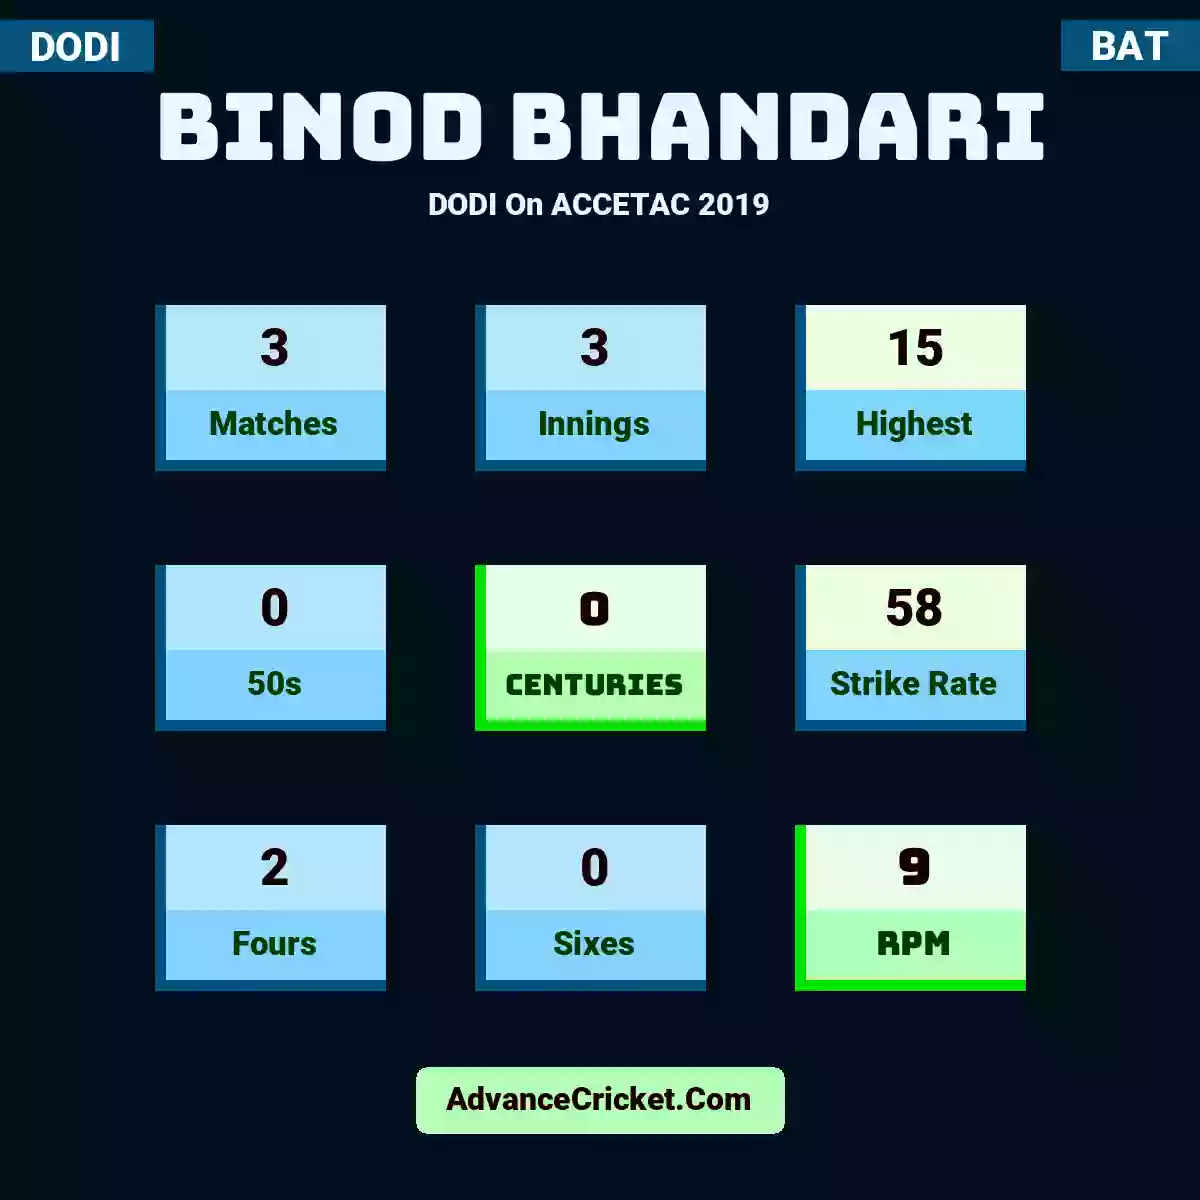 Binod Bhandari DODI  On ACCETAC 2019, Binod Bhandari played 3 matches, scored 15 runs as highest, 0 half-centuries, and 0 centuries, with a strike rate of 58. B.Bhandari hit 2 fours and 0 sixes, with an RPM of 9.